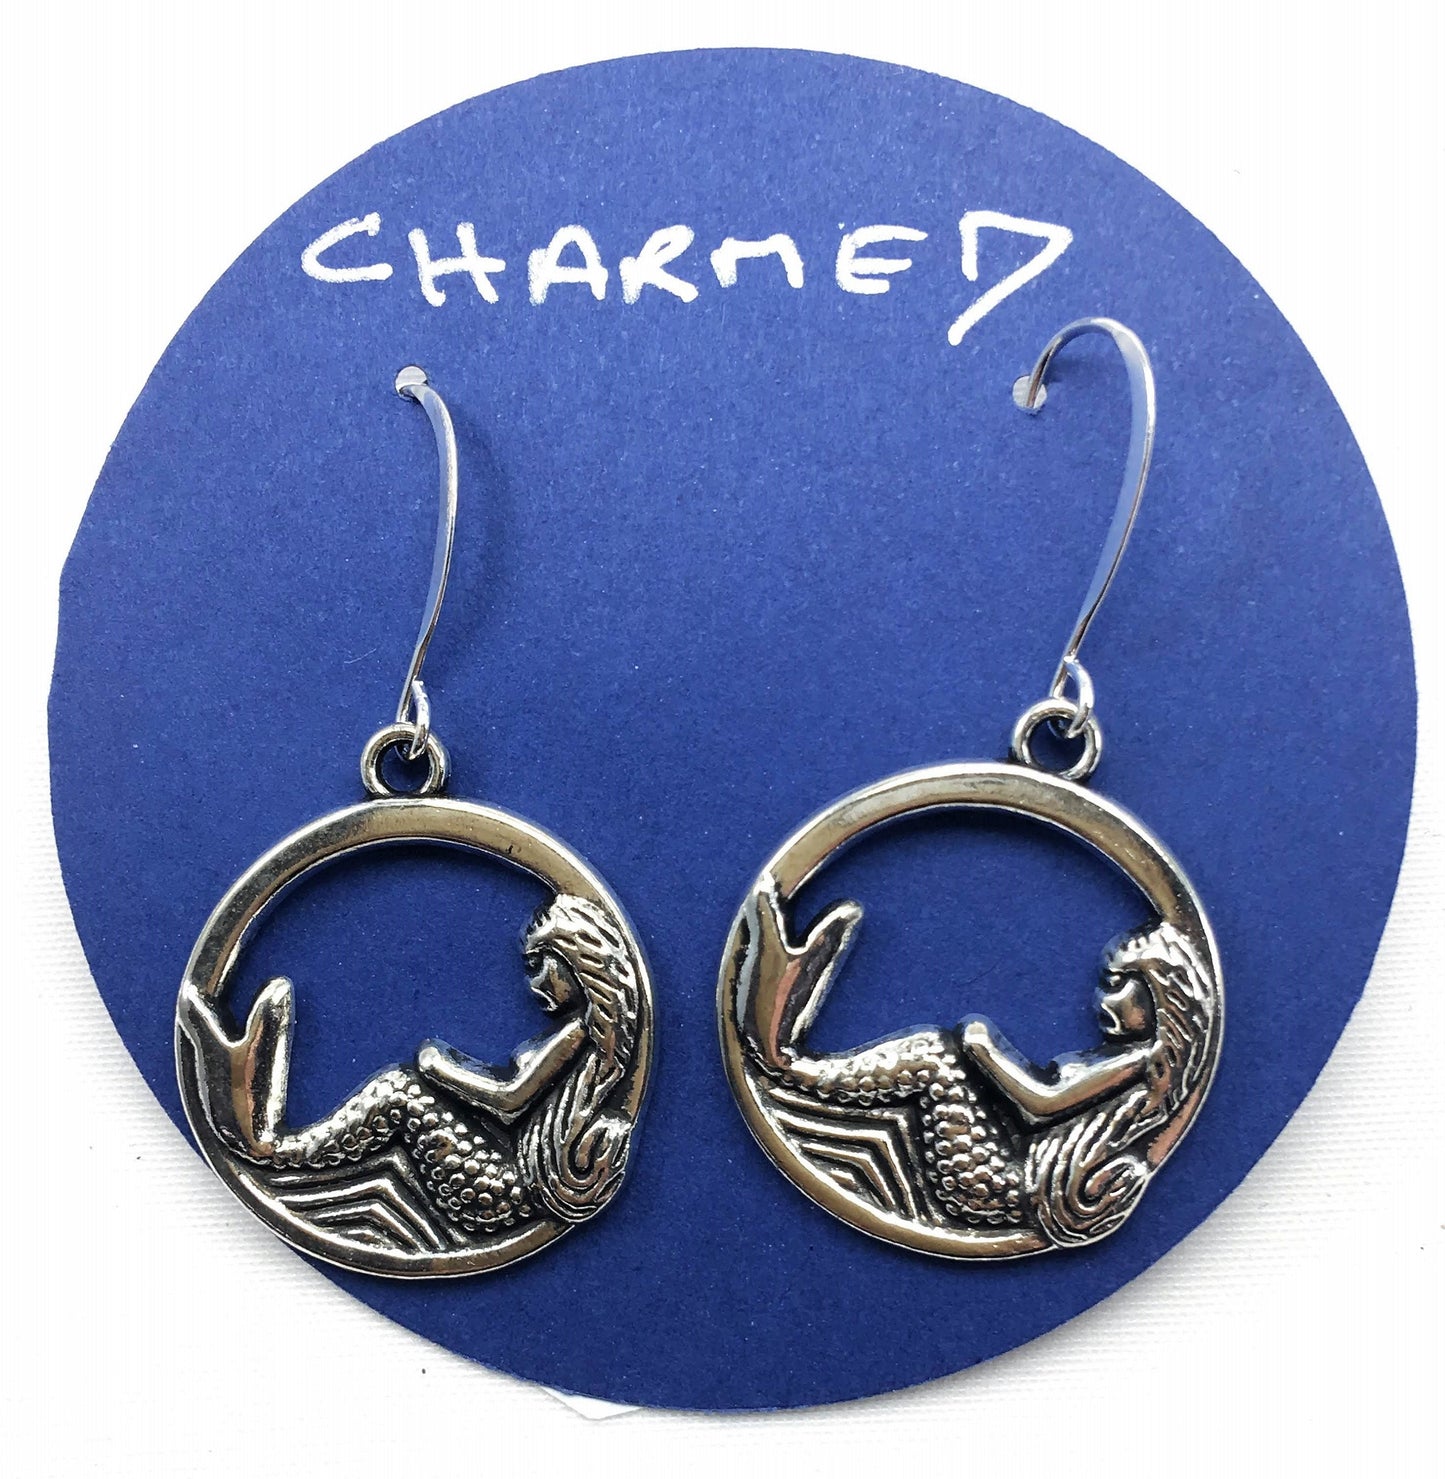 Charmed! Mermaid Medallion Earrings Silver Plate Antique Finish on hypoallergenic surgical steel hooks